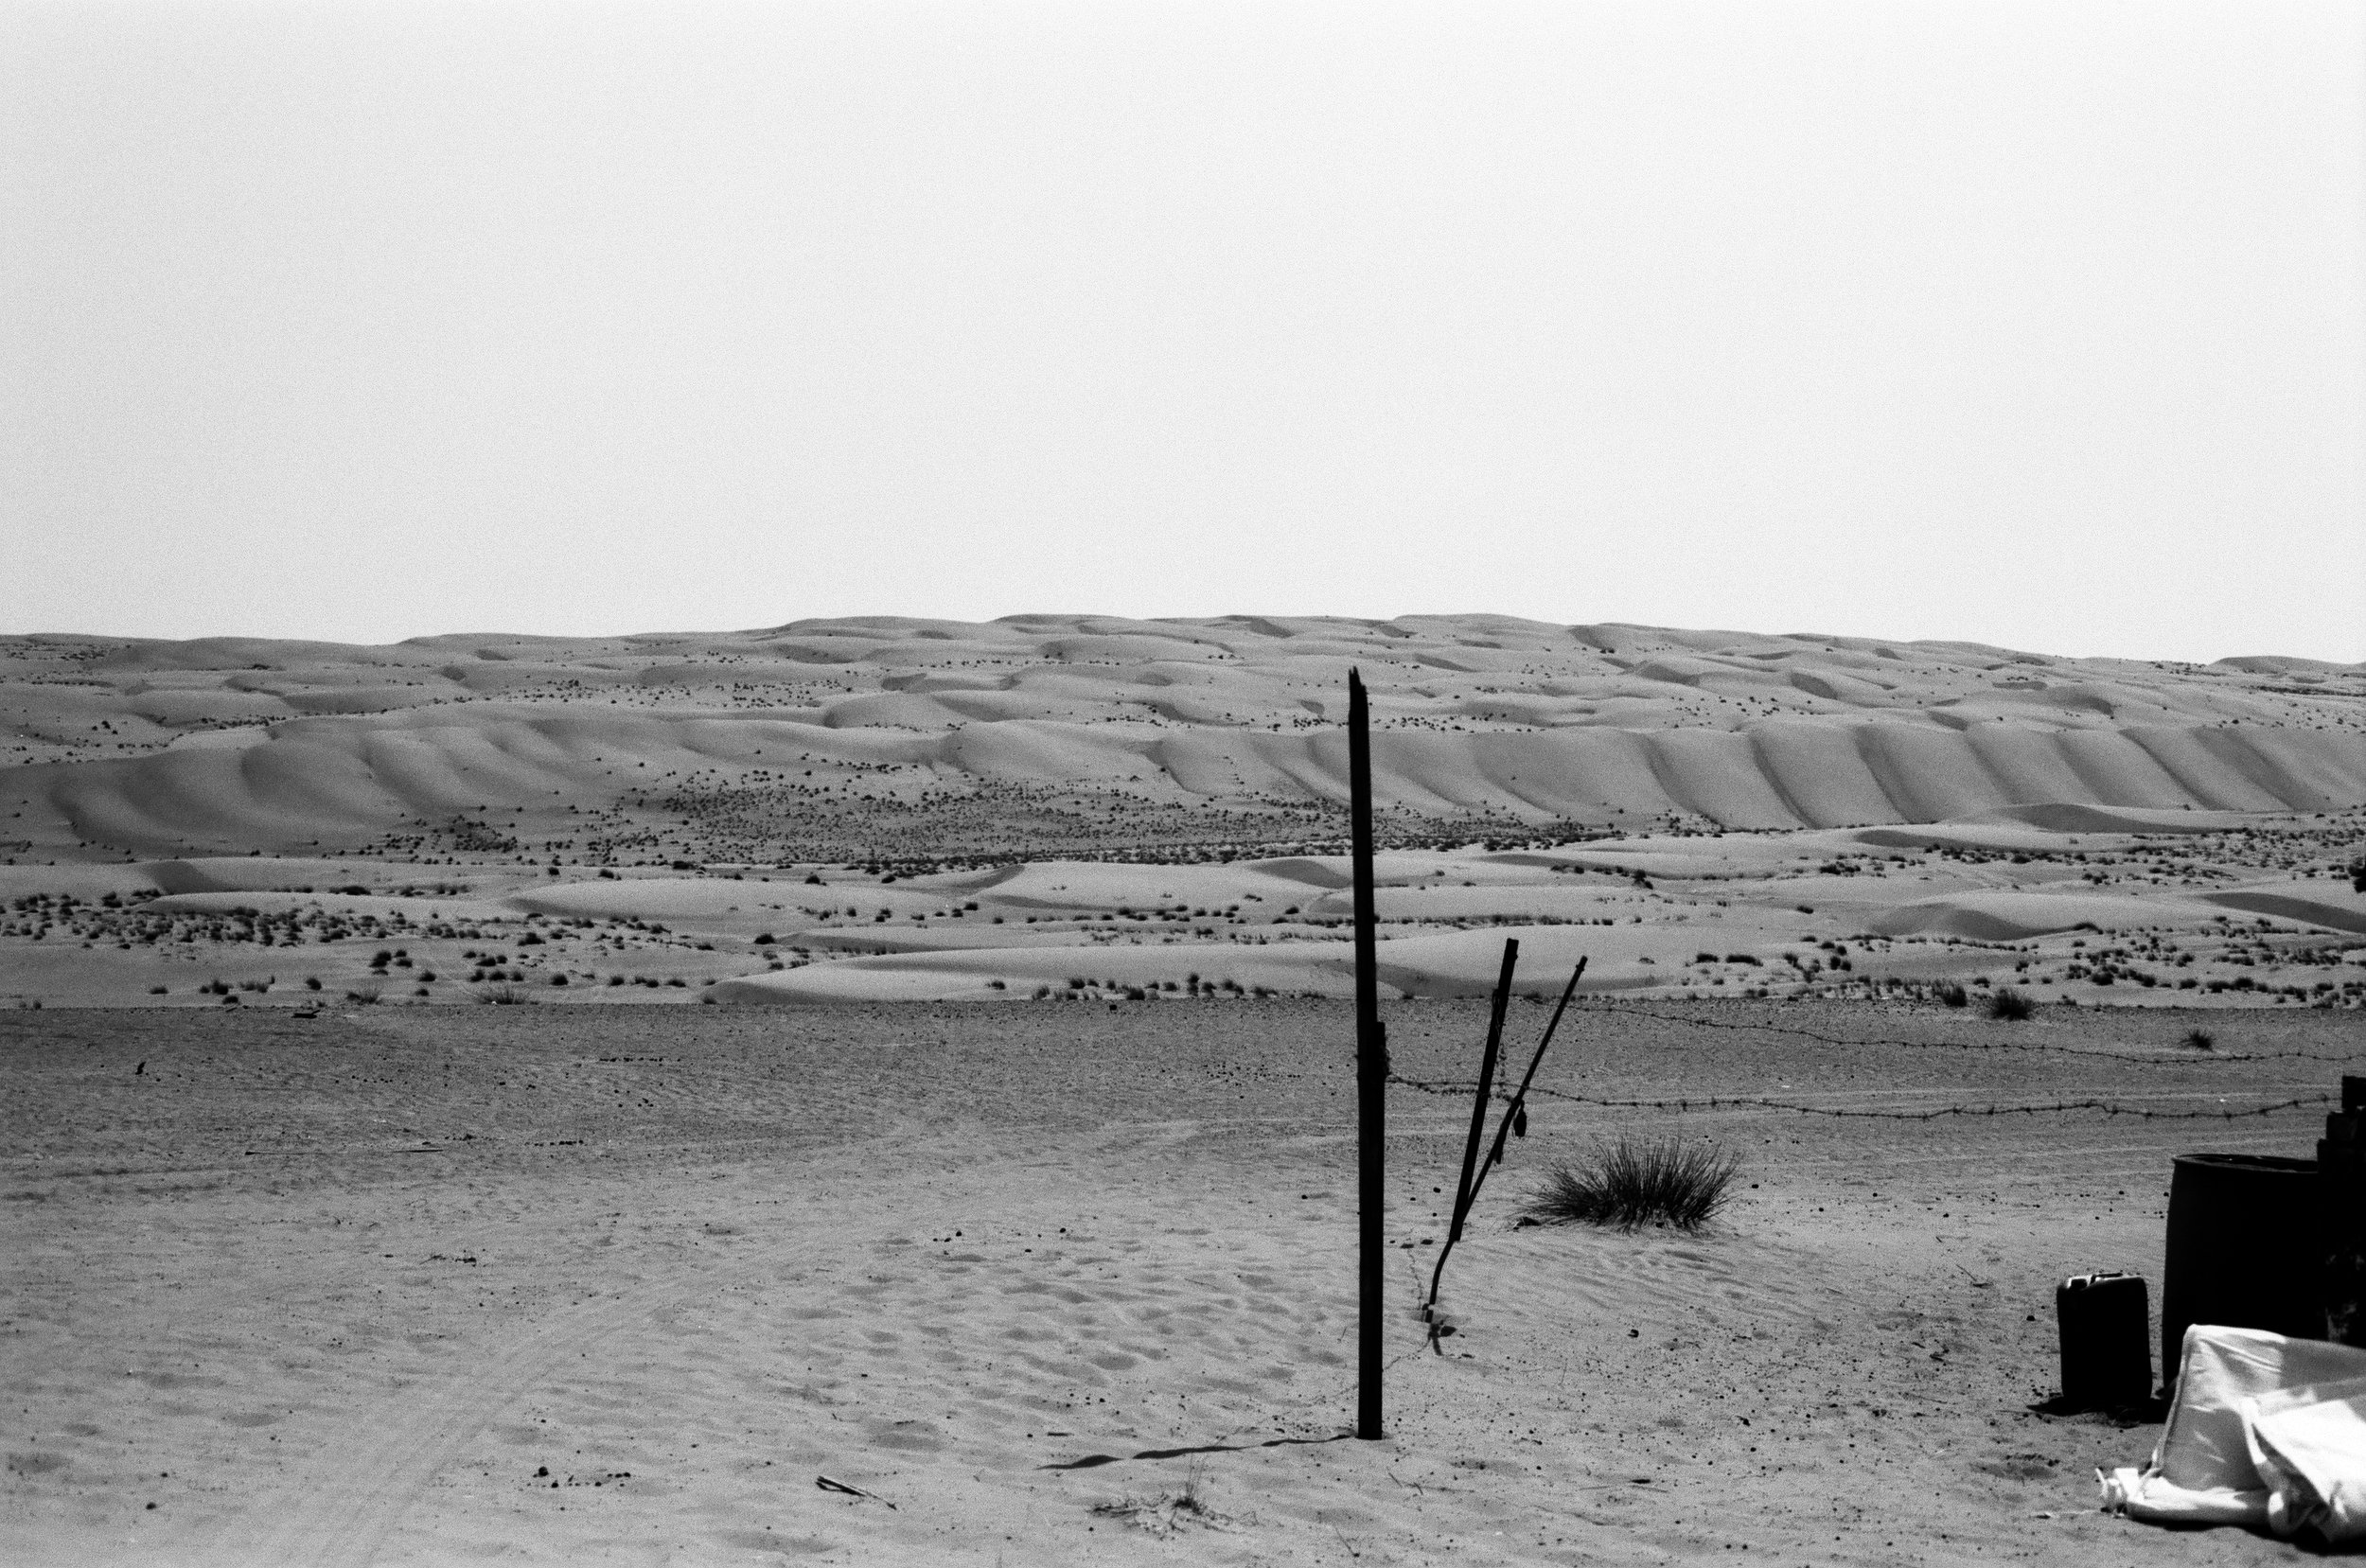  Dunes, Wahiba Sands, Oman; Minolta SRT 201 35mm; 2023 